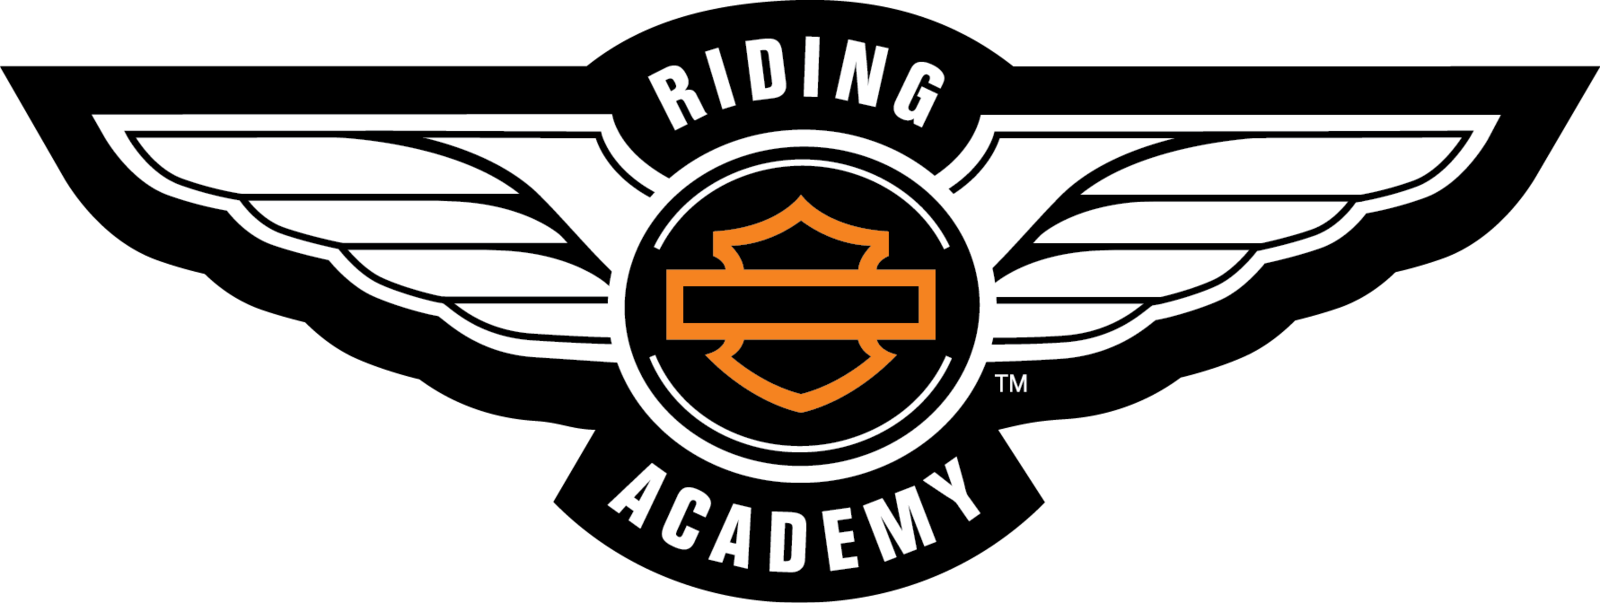 Harley Davidson Riding Academy Logo PNG